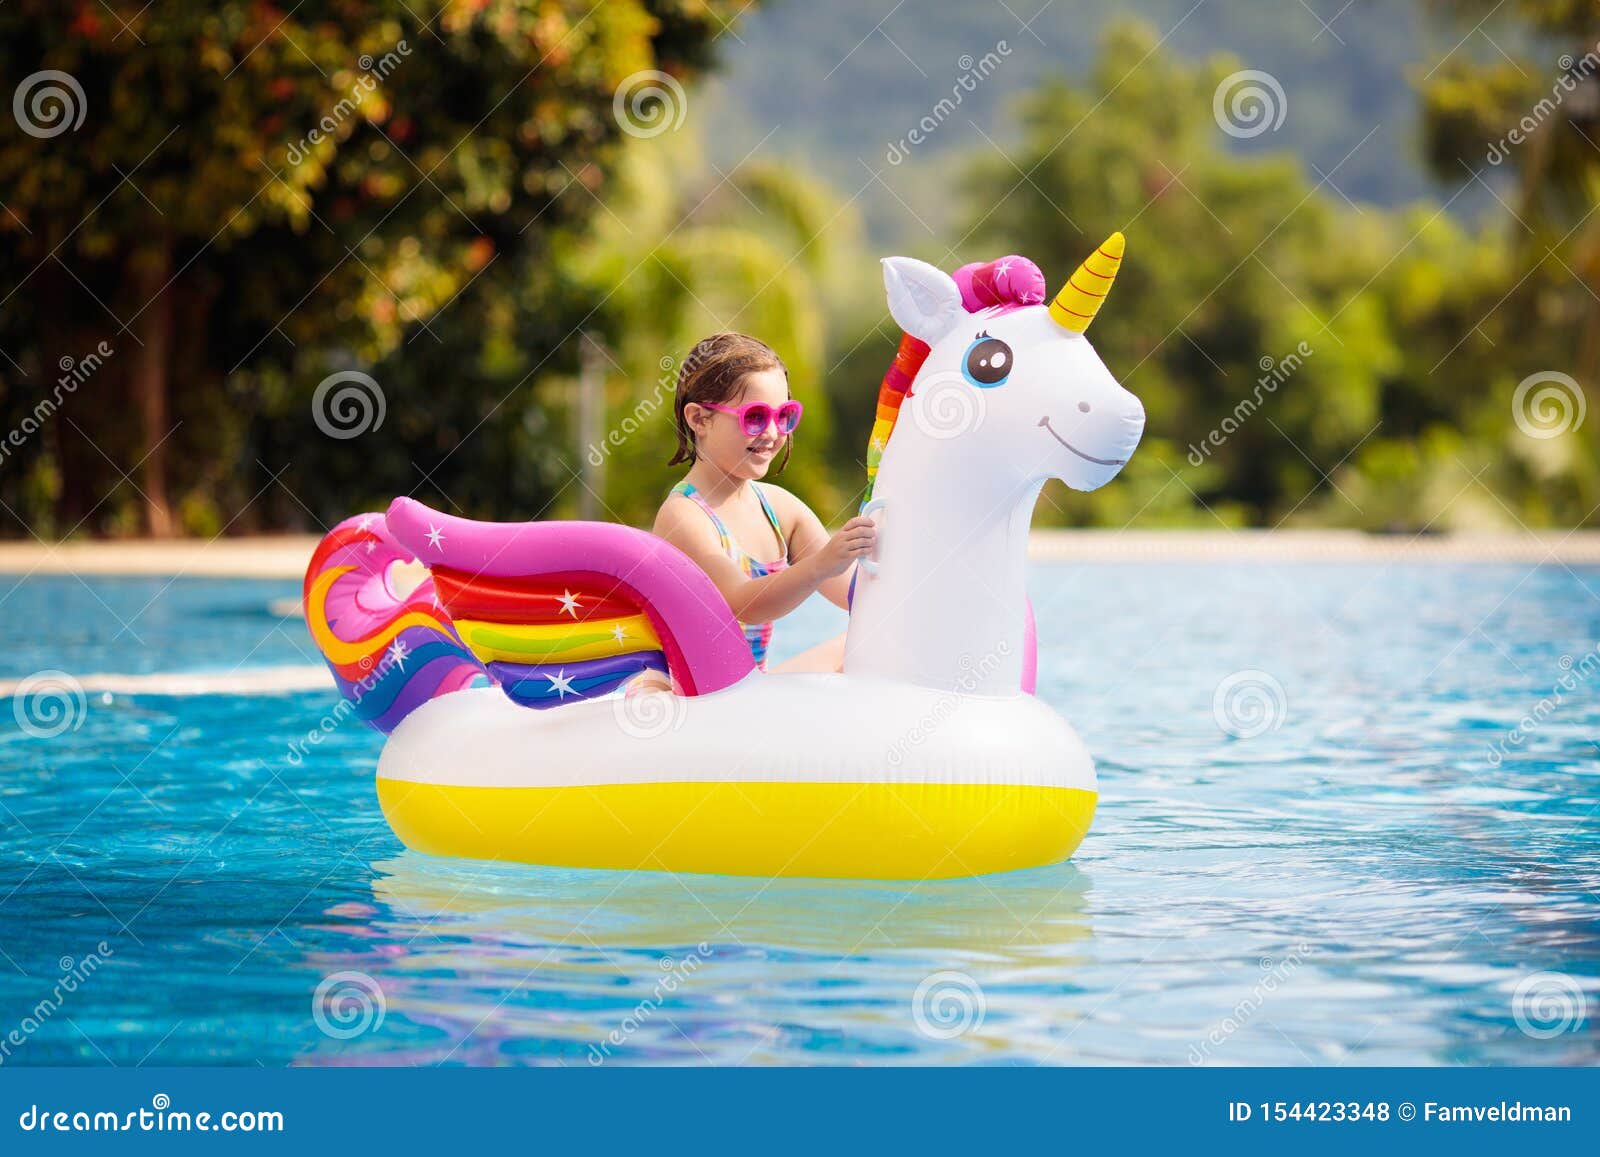 child on unicorn float in swimming pool. kids swim